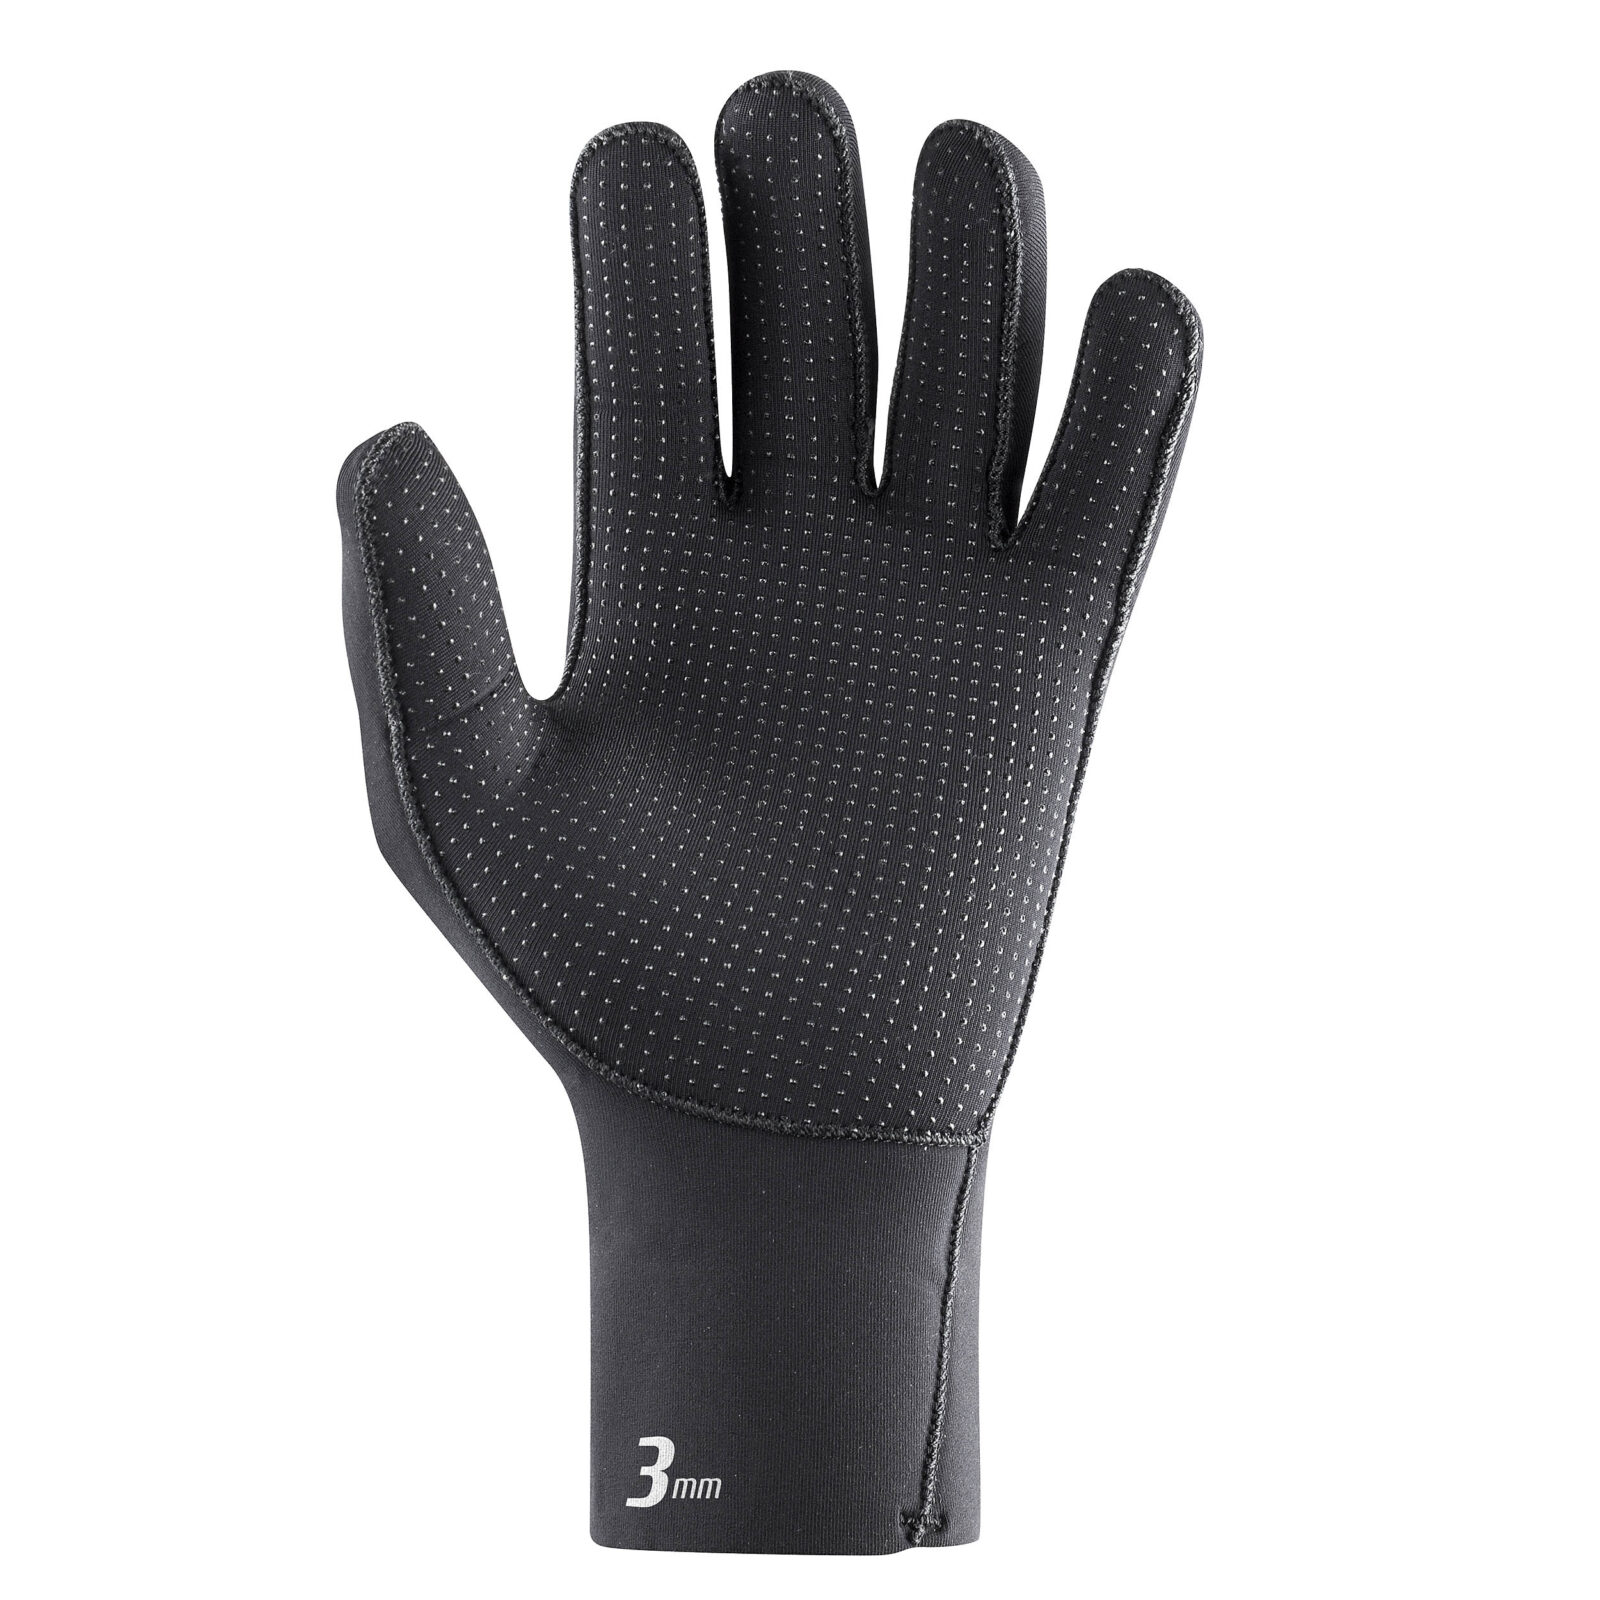 Subea Neoprene Gloves 3mm  Blind stitch, Hand warmers, Gloves